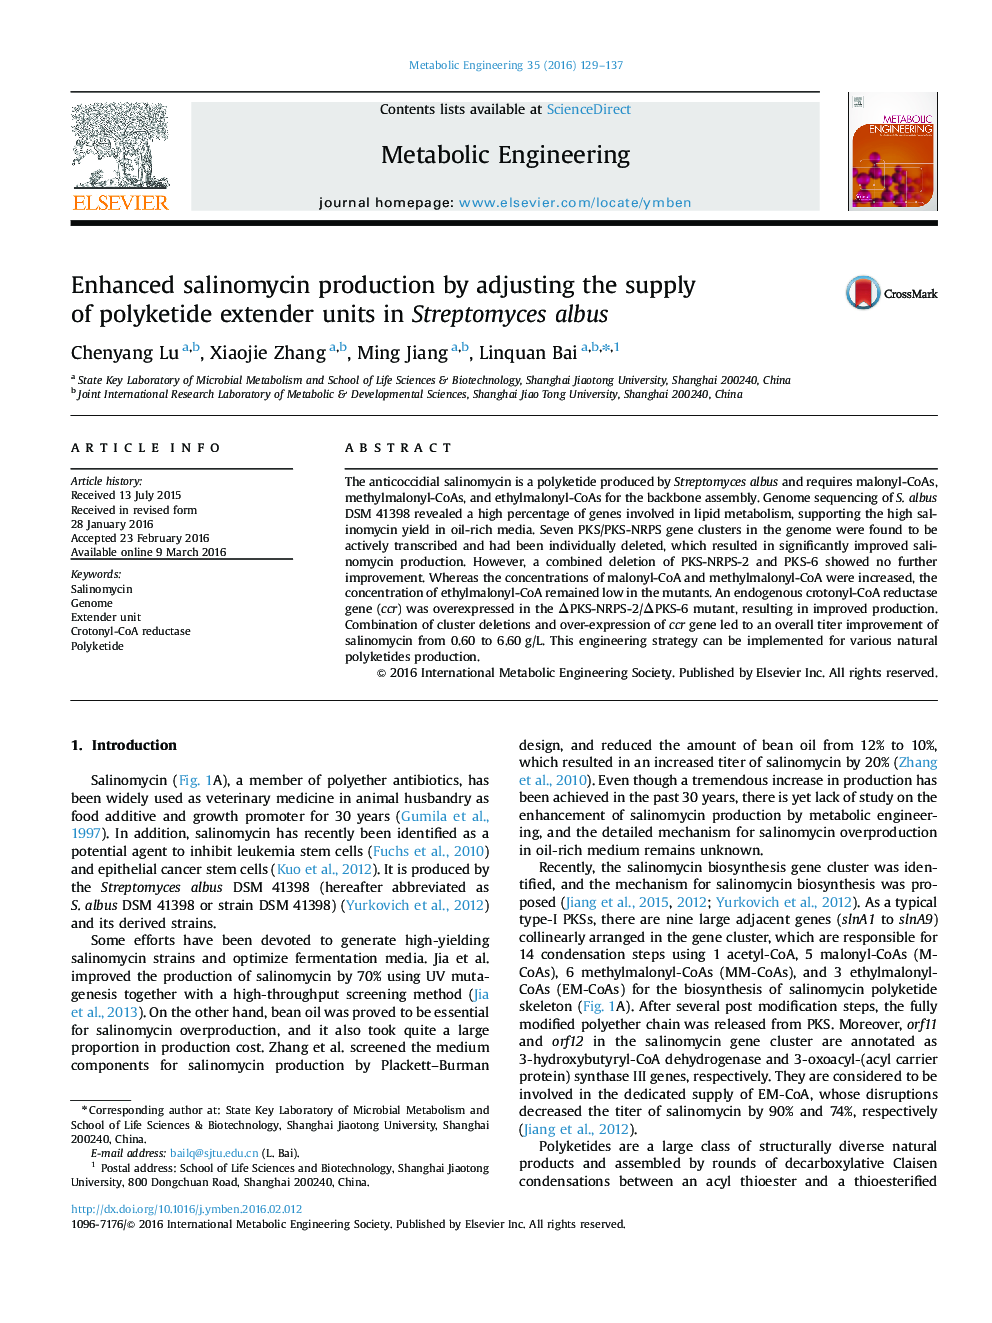 Enhanced salinomycin production by adjusting the supply of polyketide extender units in Streptomyces albus